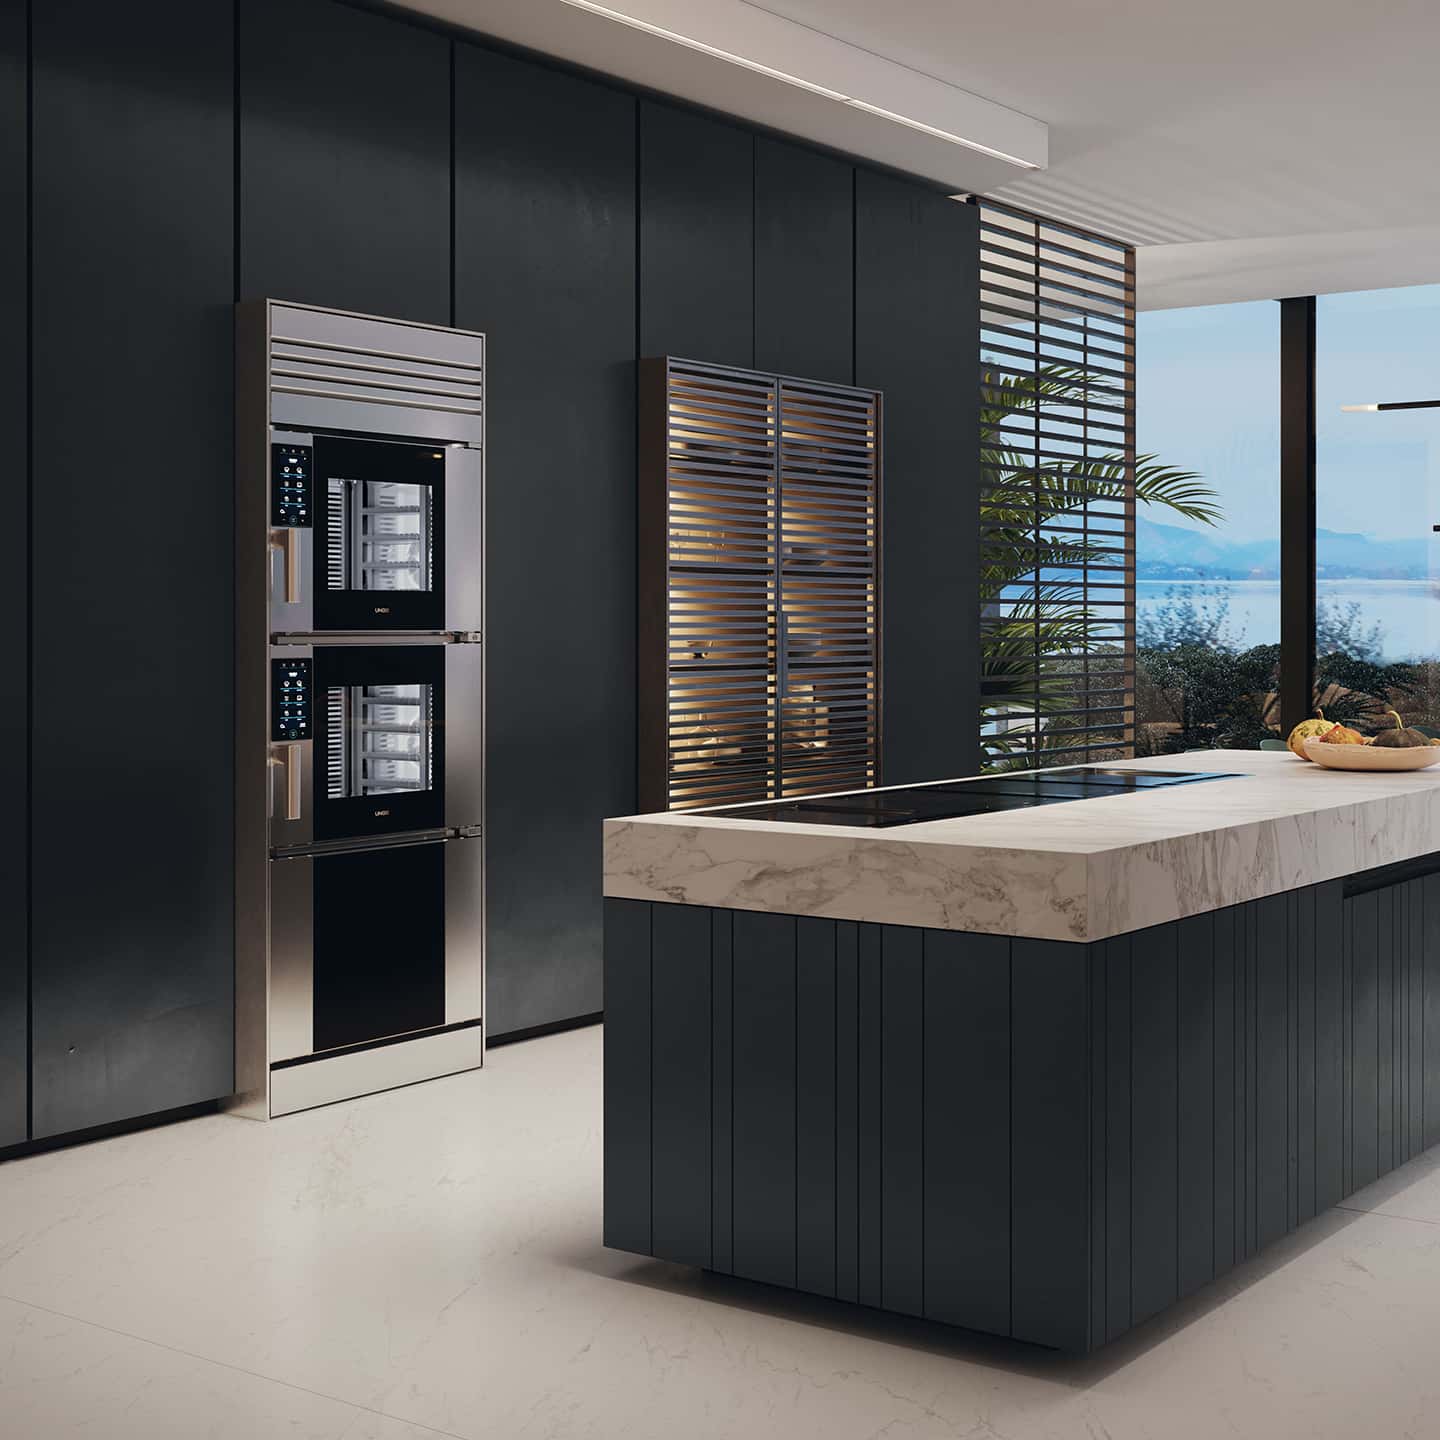 Unox Casa smart ovens in an elegant luxury kitchen overlooking Lake Maggiore